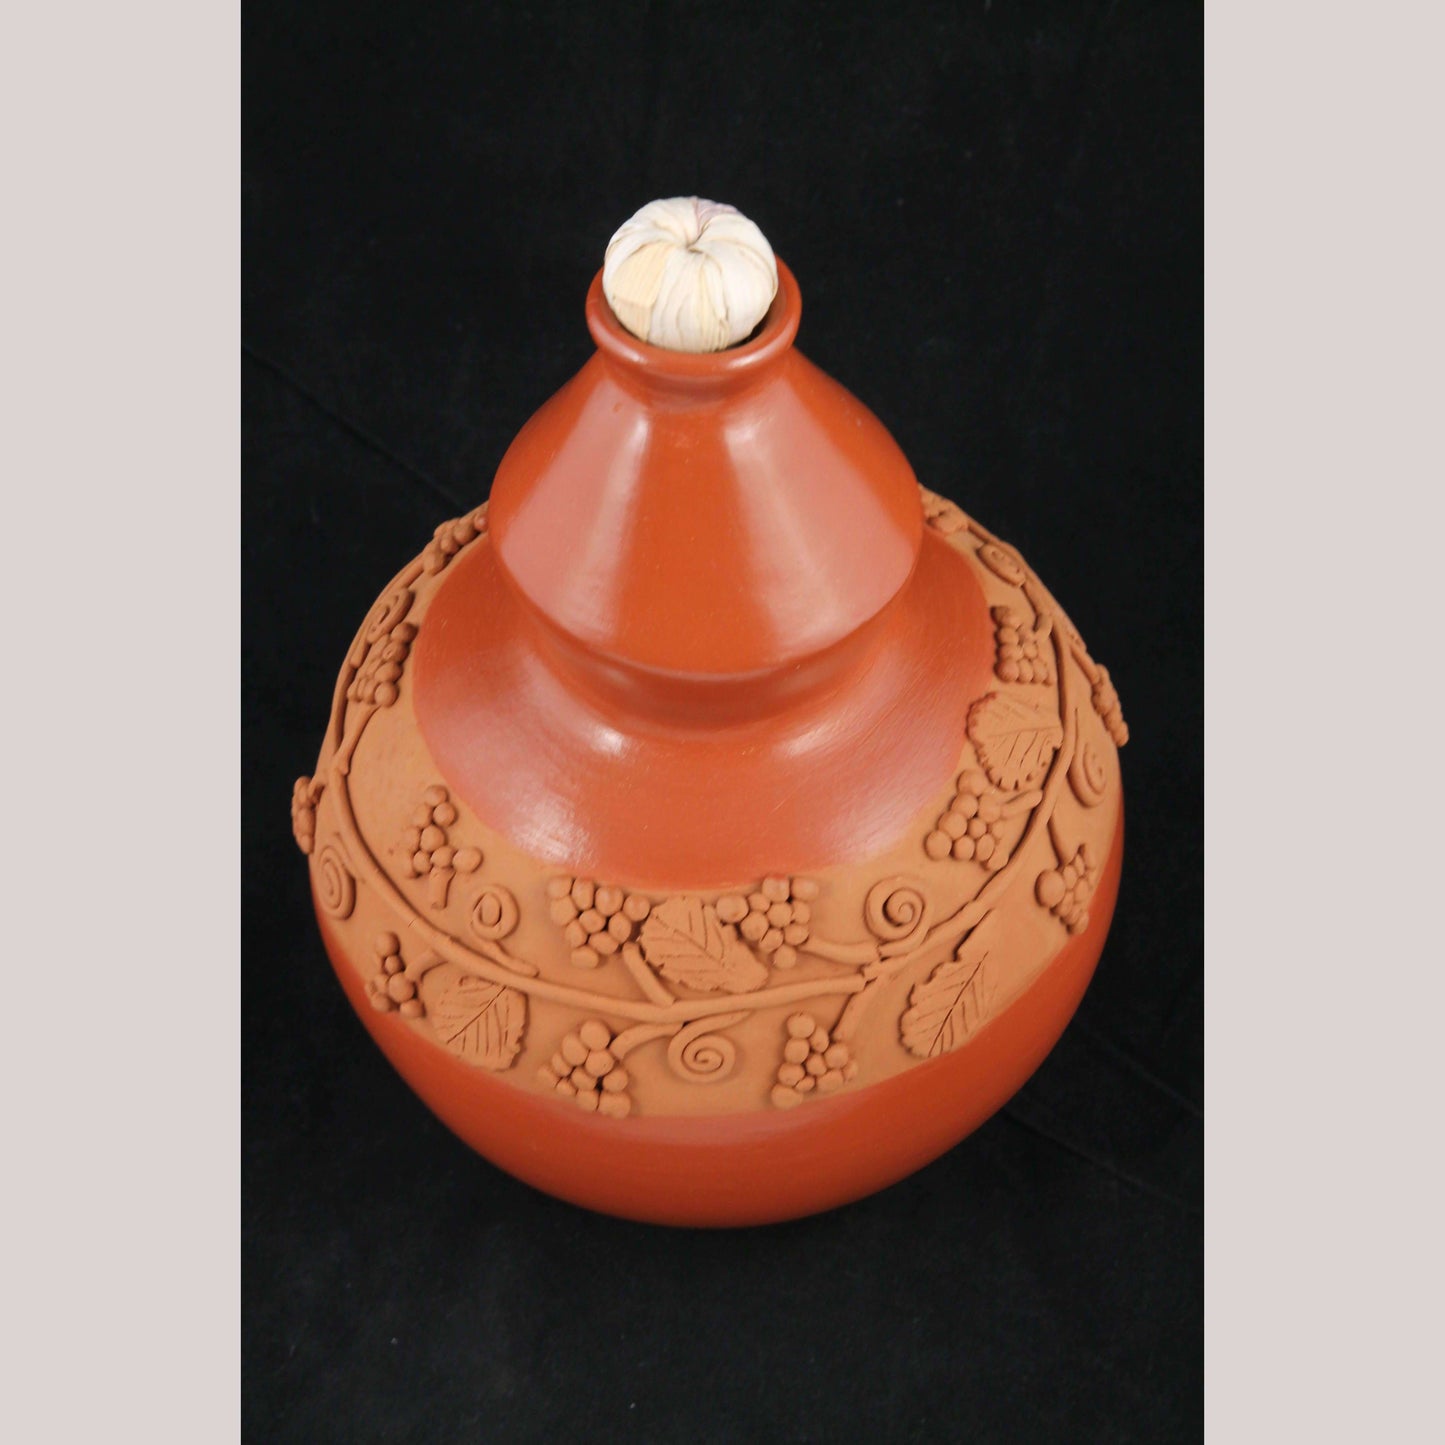 Mexican Ceramic Water Jug/Container Handmade Folk Art Pottery Neftali Ramirez